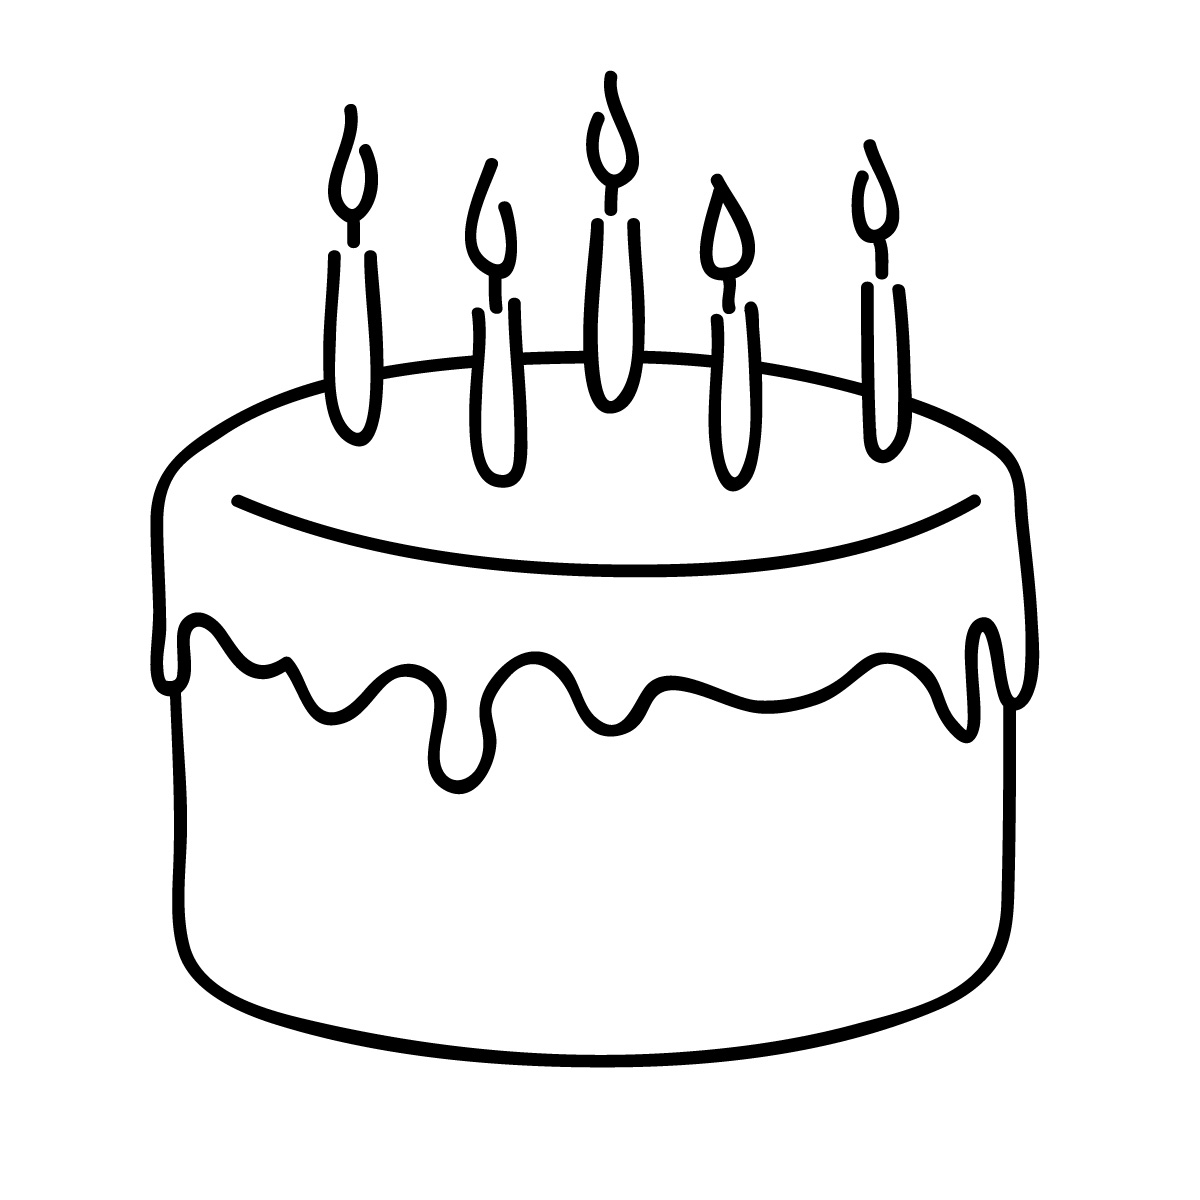 Birthday Cake Clip Art Free Black And White